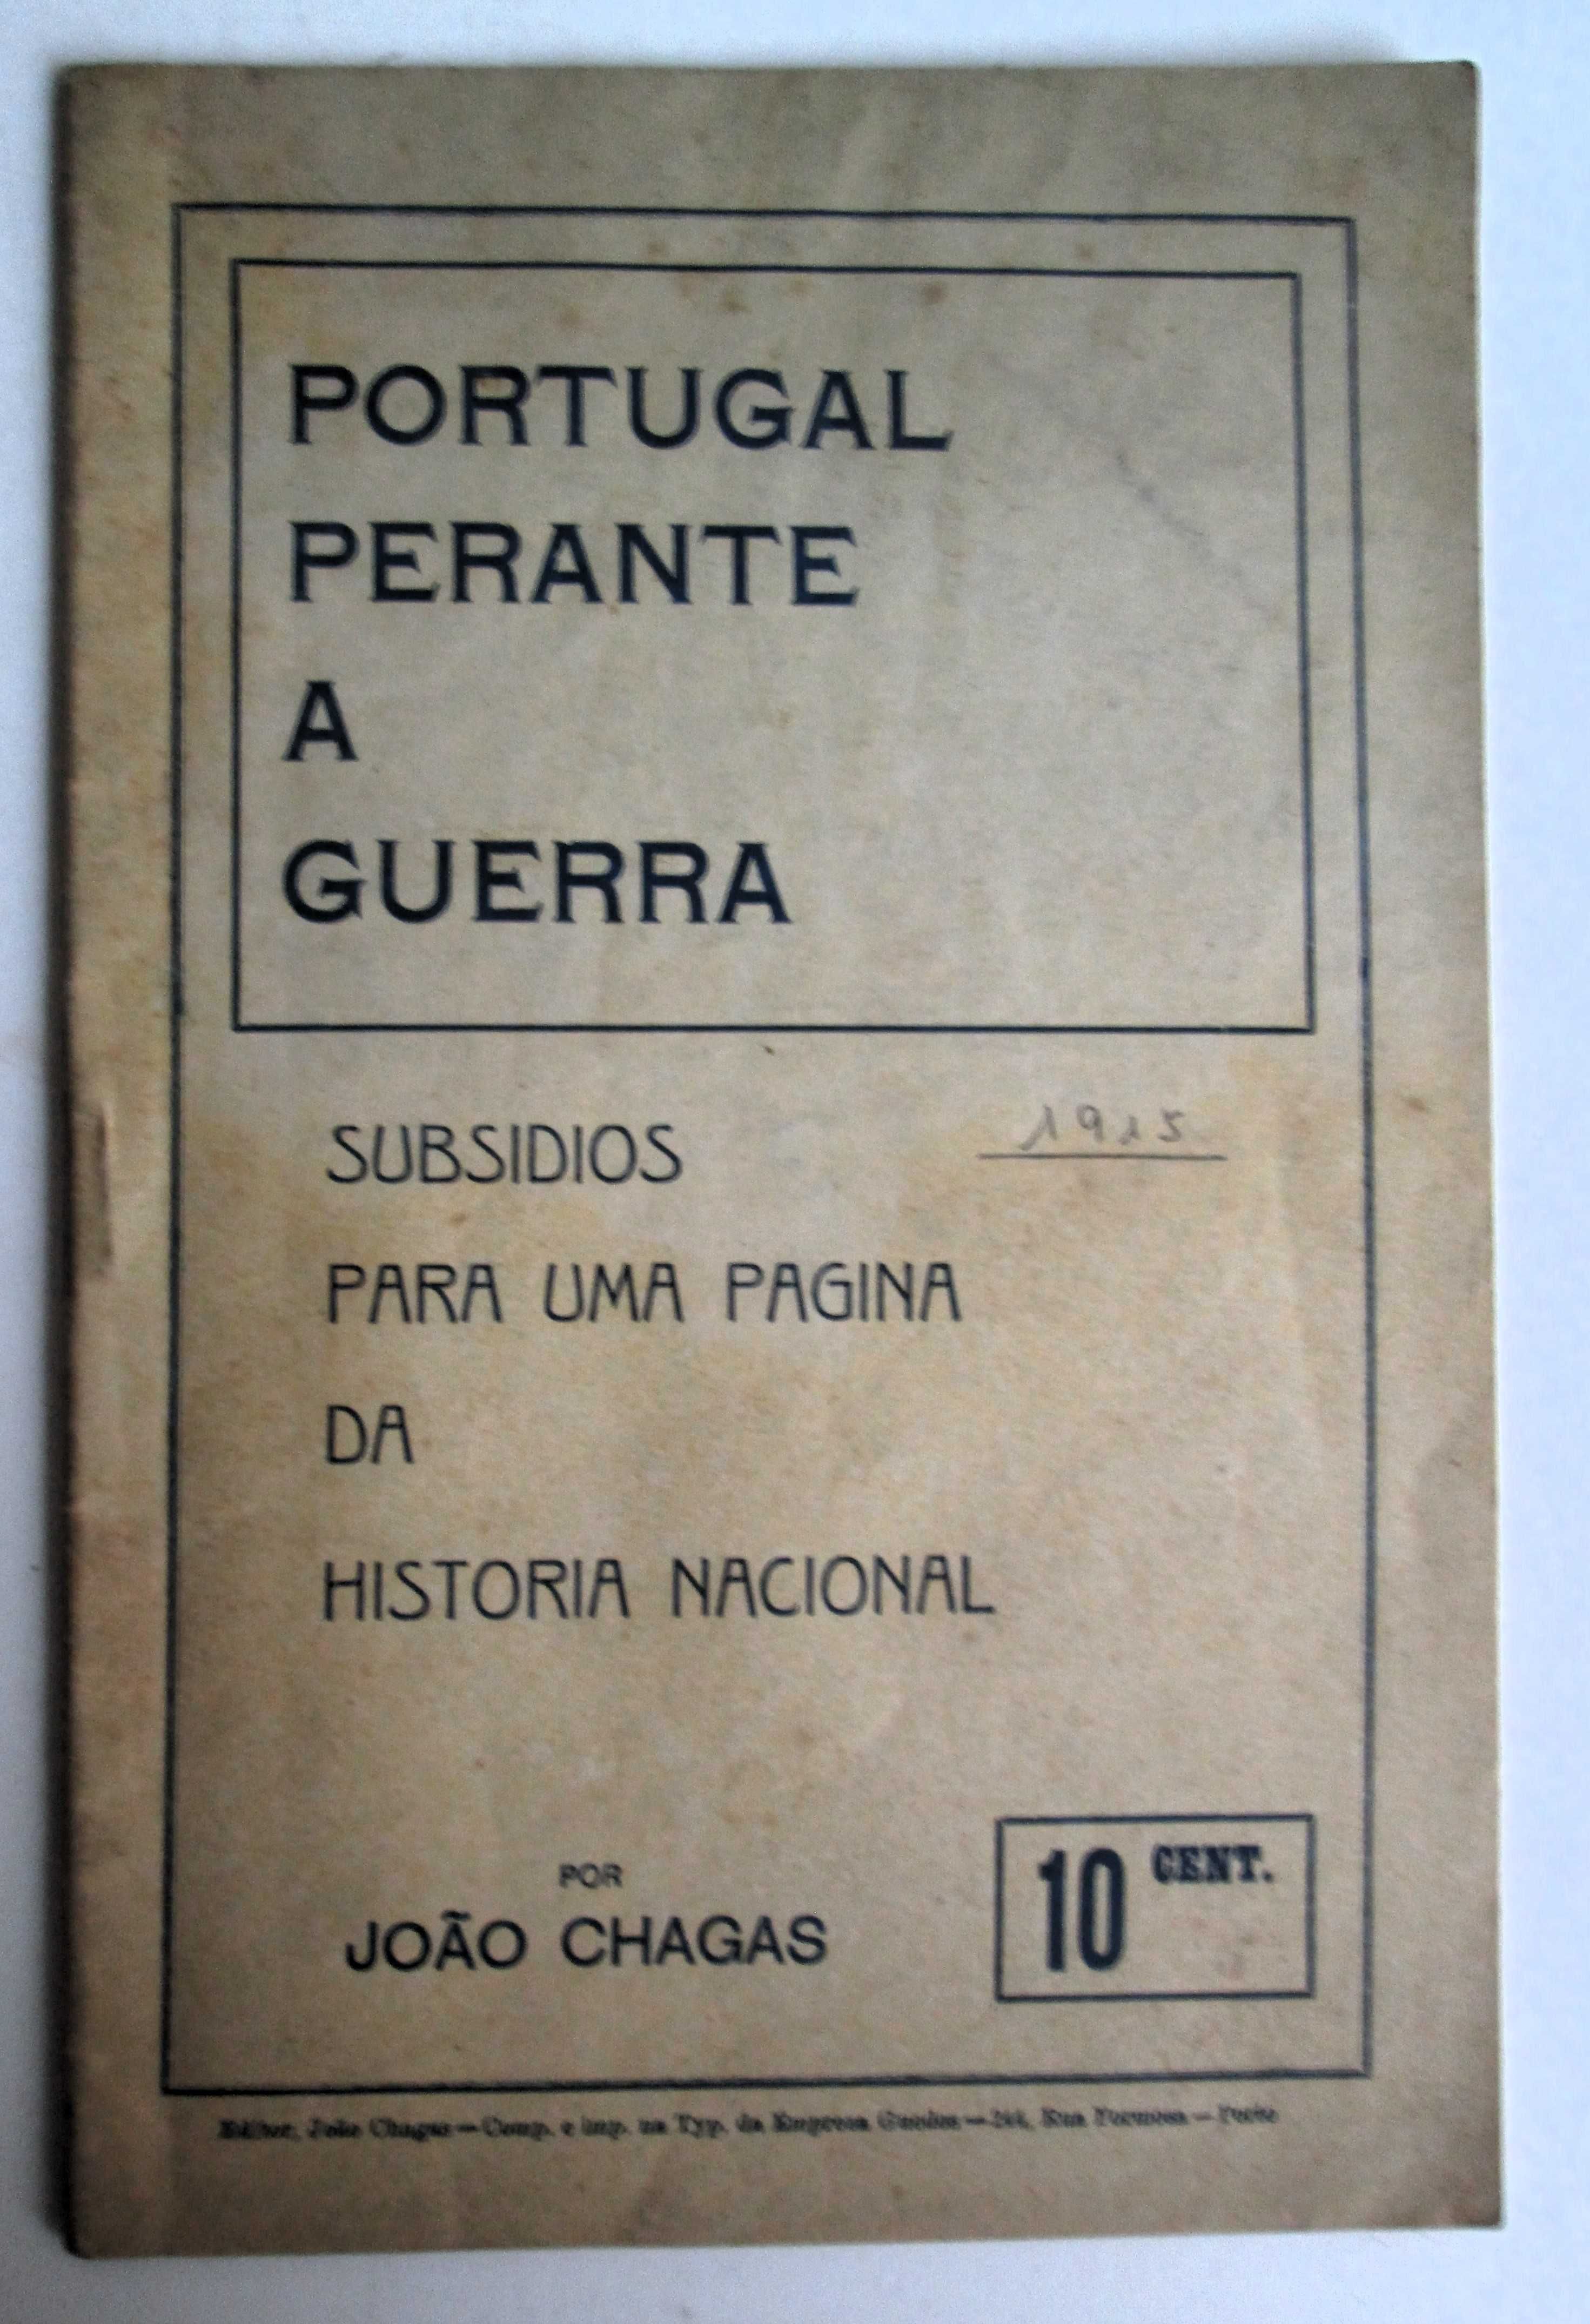 Portugal perante a guerra 1915